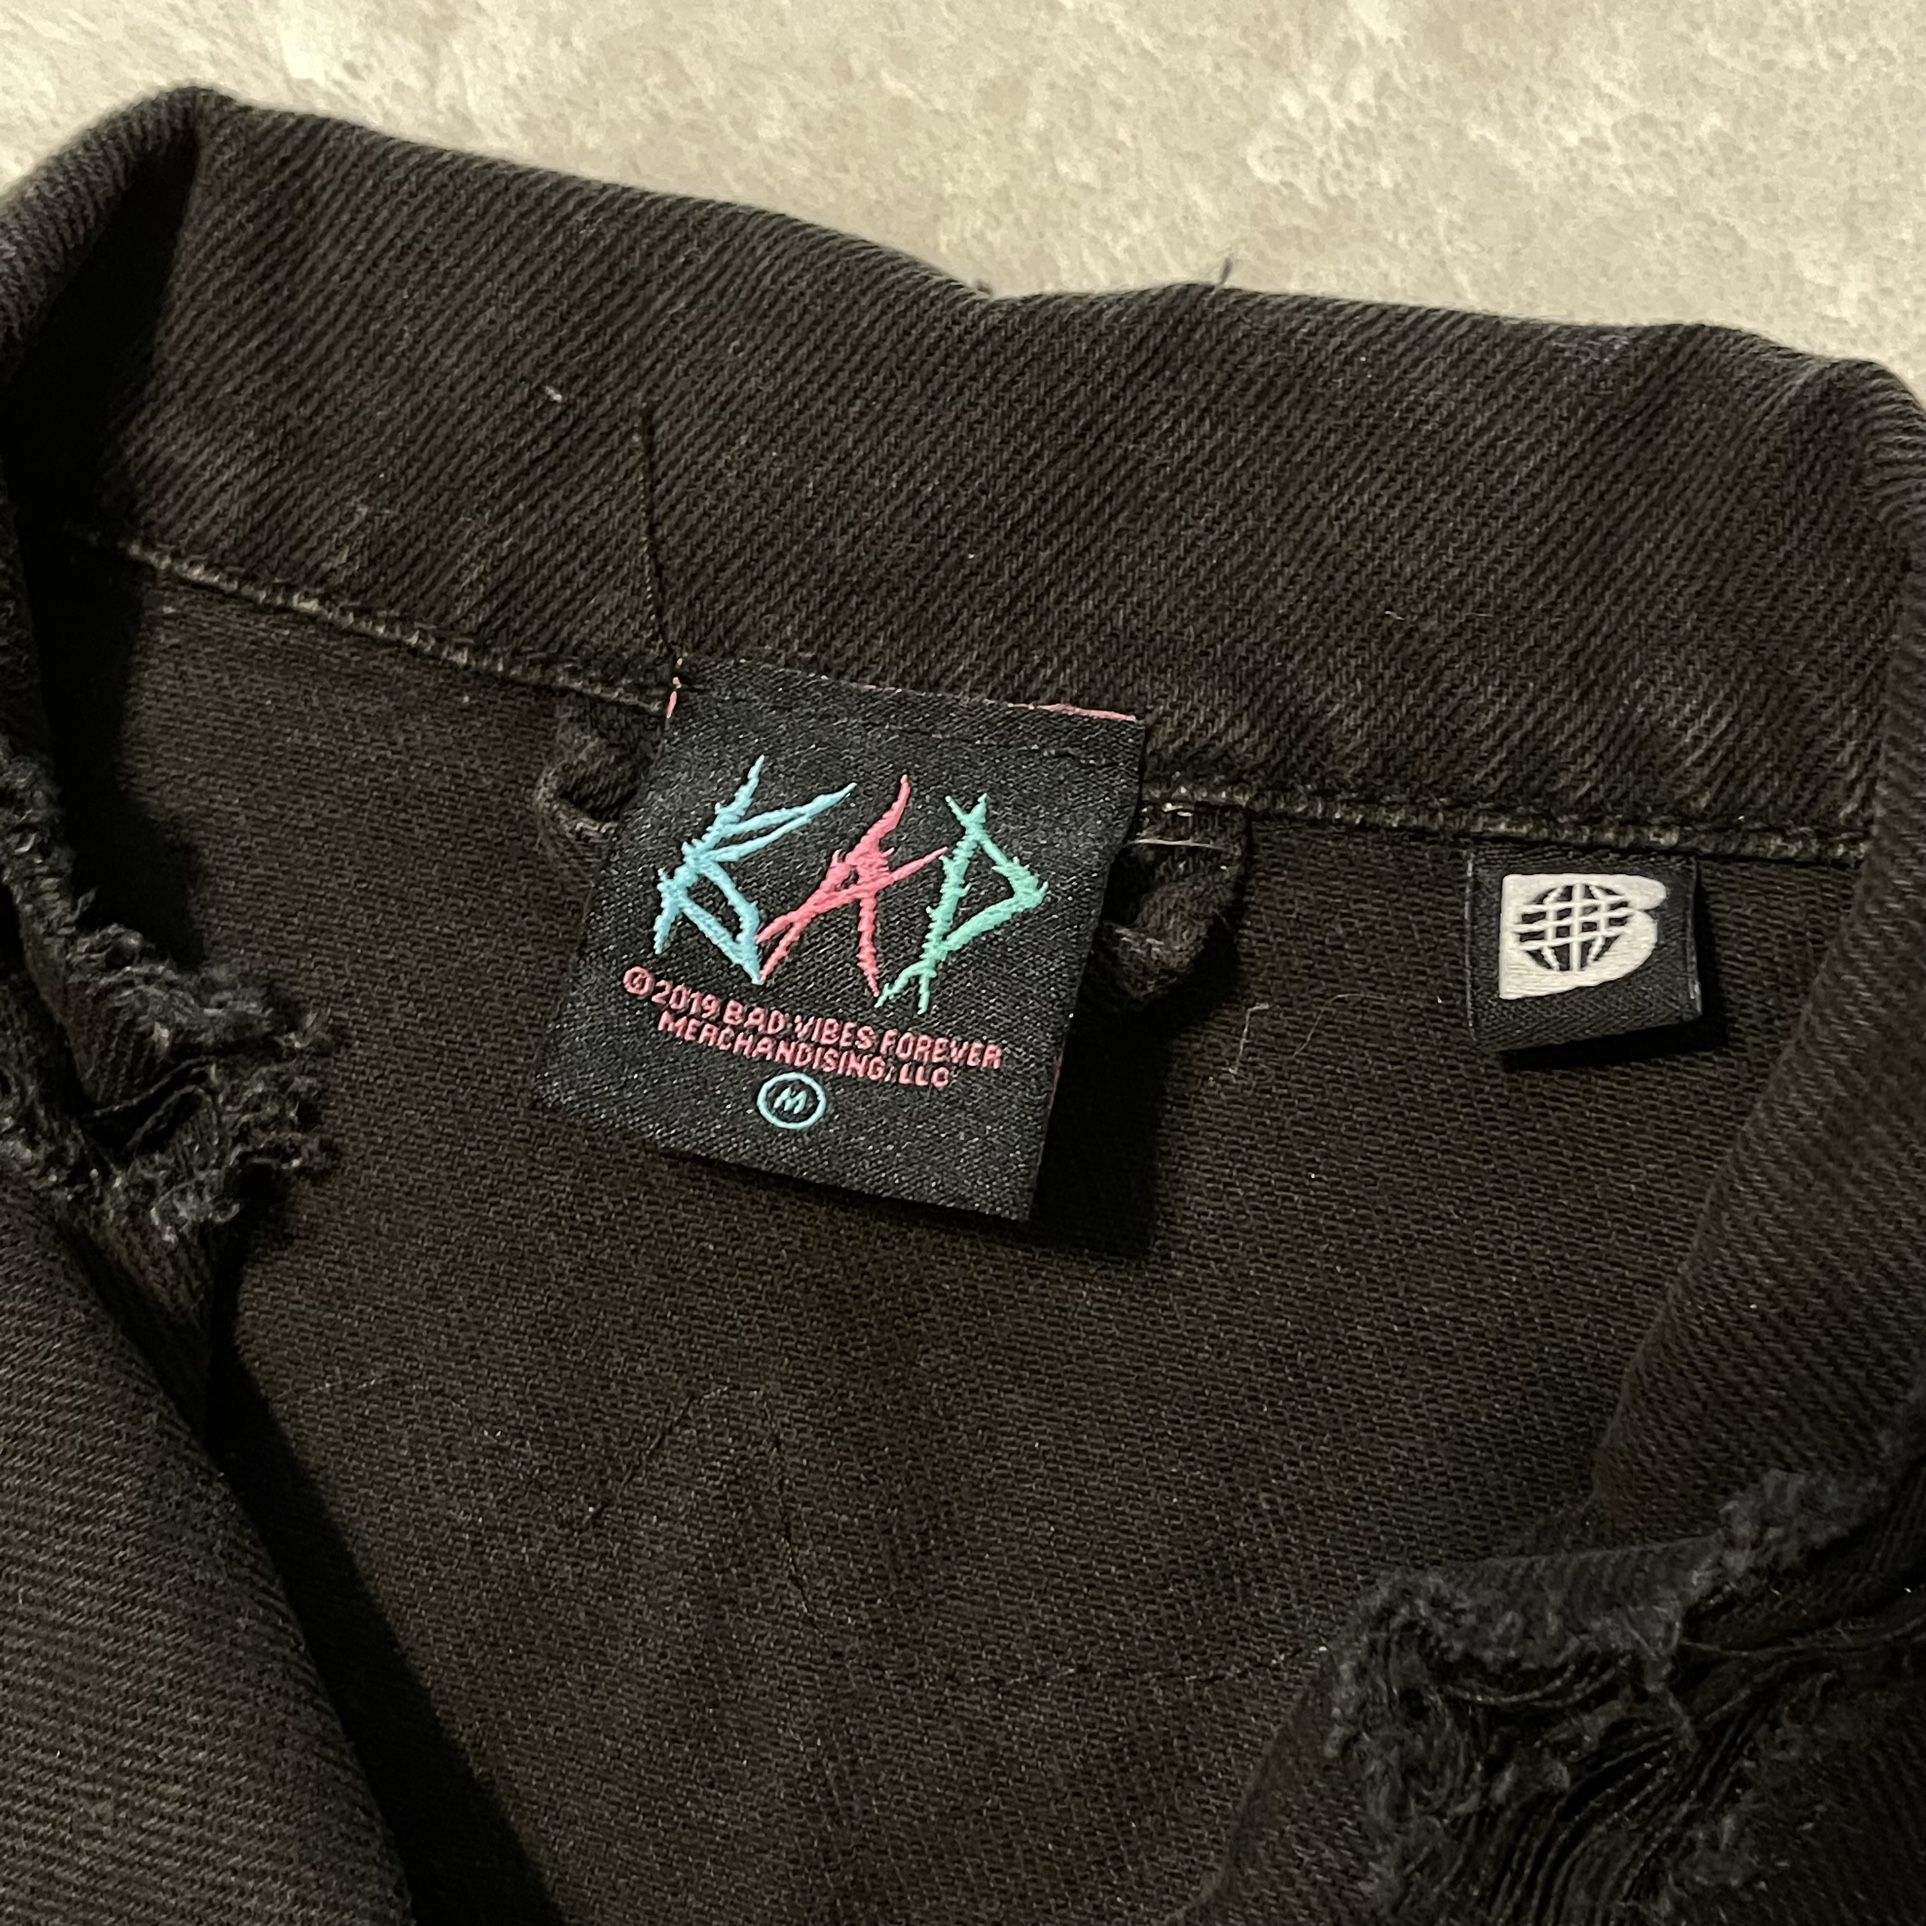 XXXTENTACION “Bad” Embroidered Distressed Denim Jacket